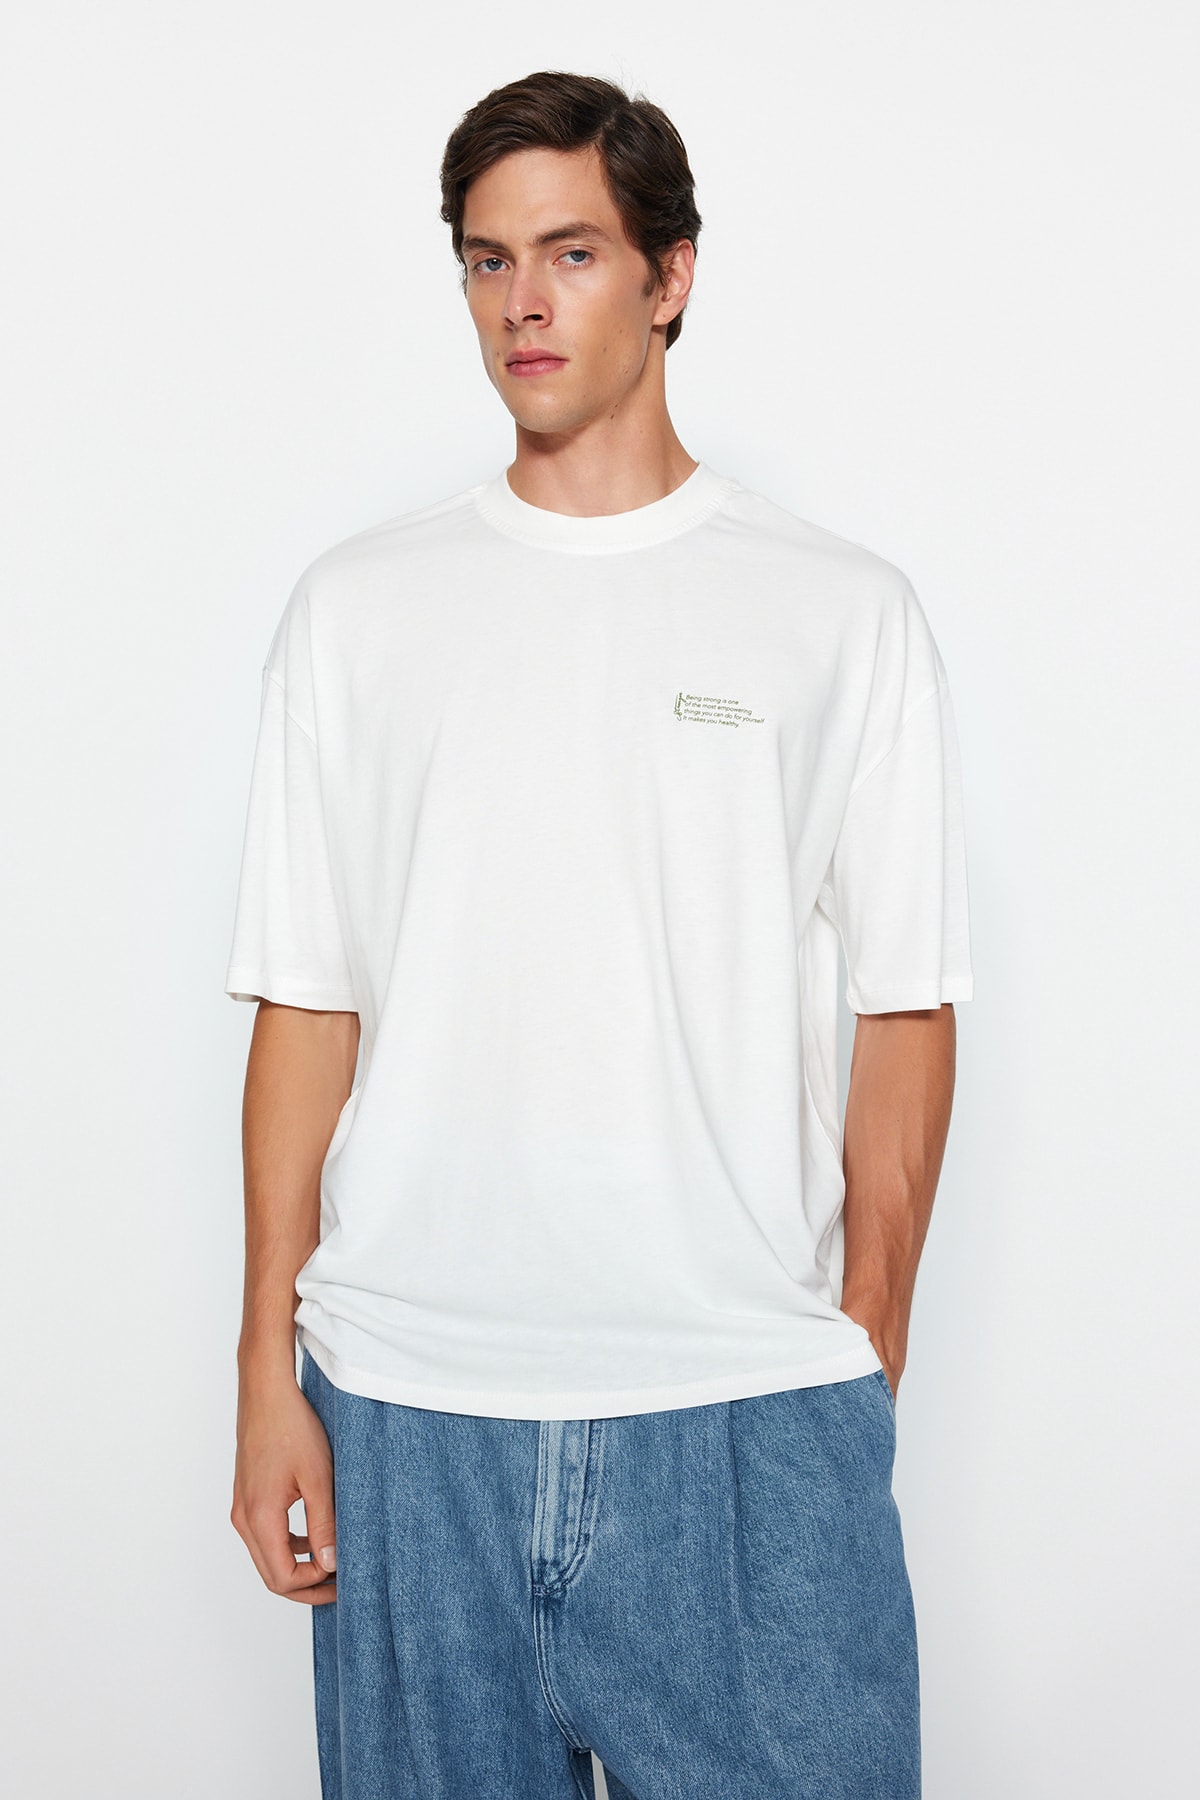 Trendyol Ecru Men's Oversize/Wide Cut, Minimal Text Printed 100% Cotton T-Shirt